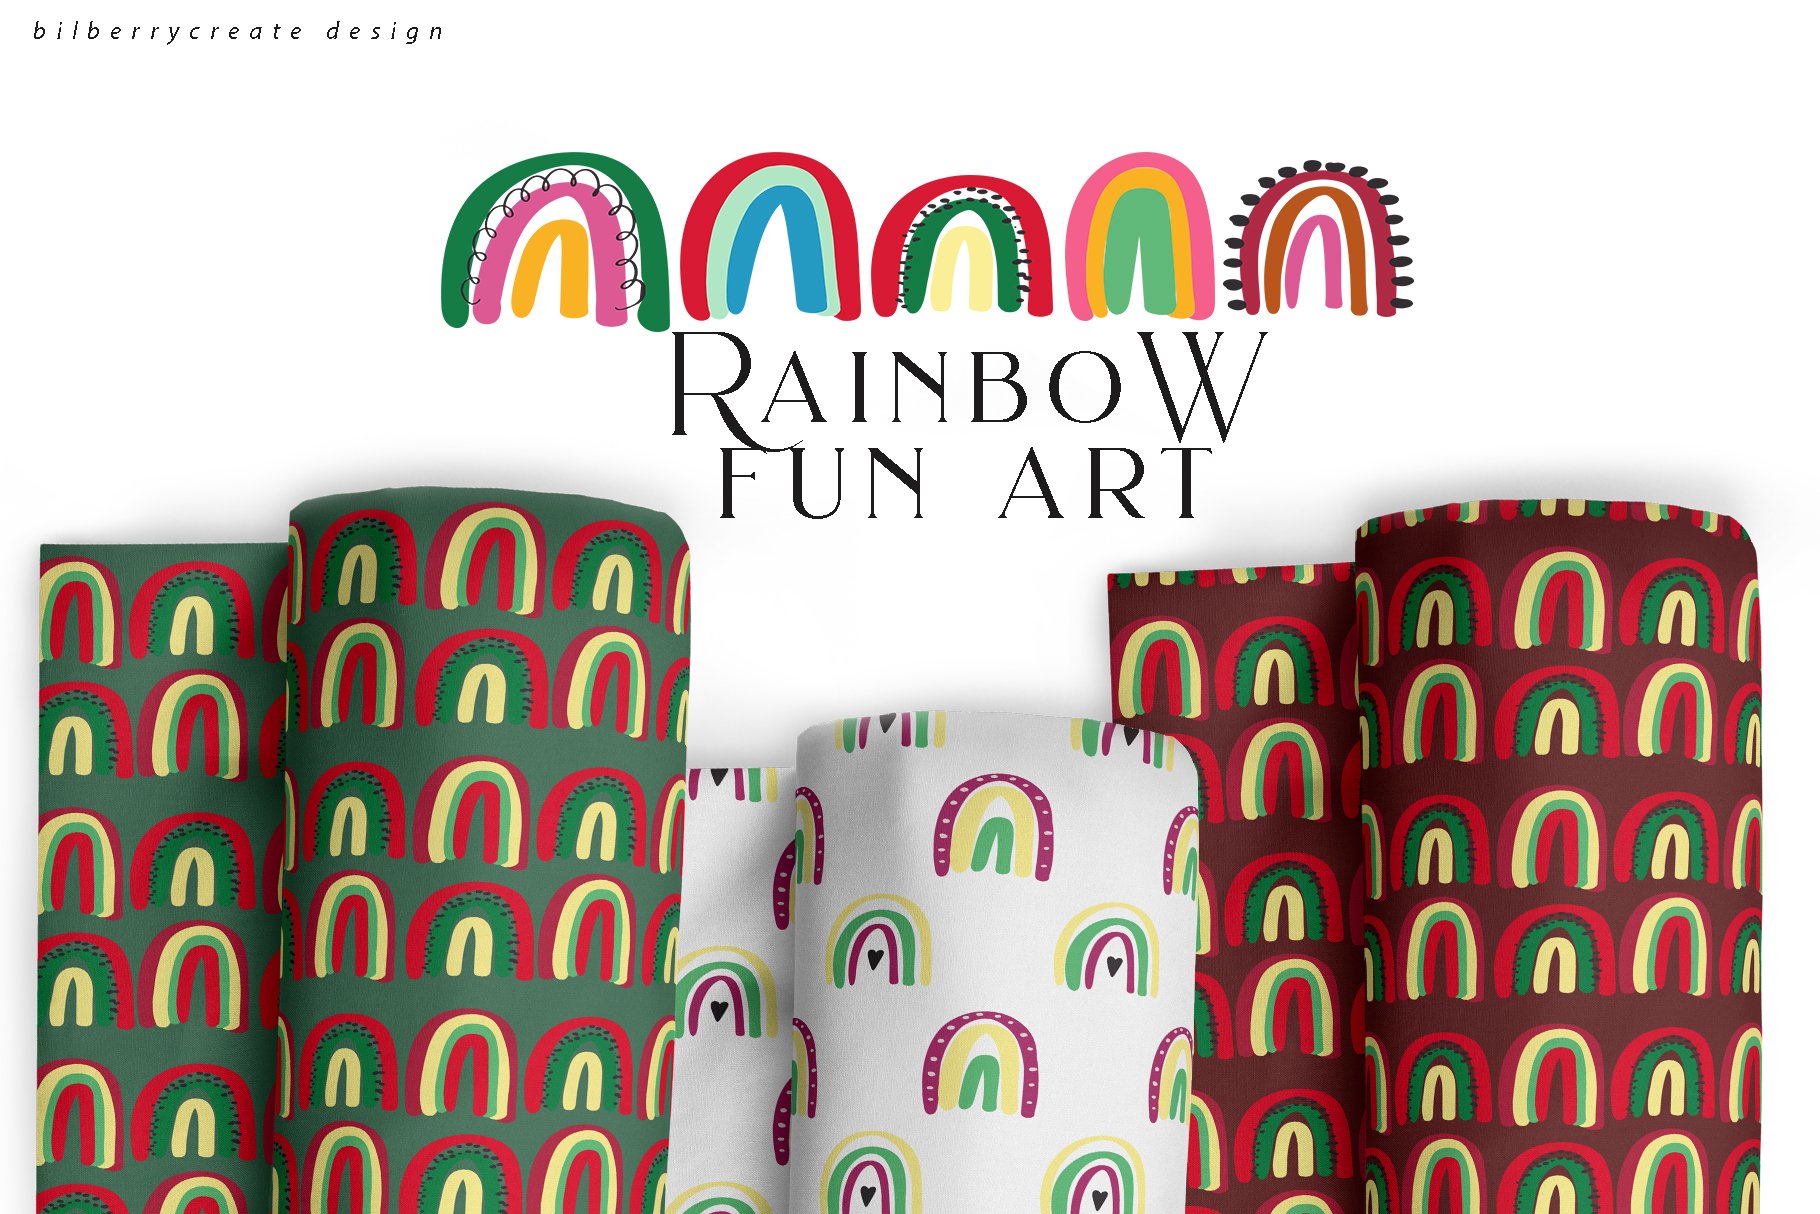 Rainbow Fun Art preview image.